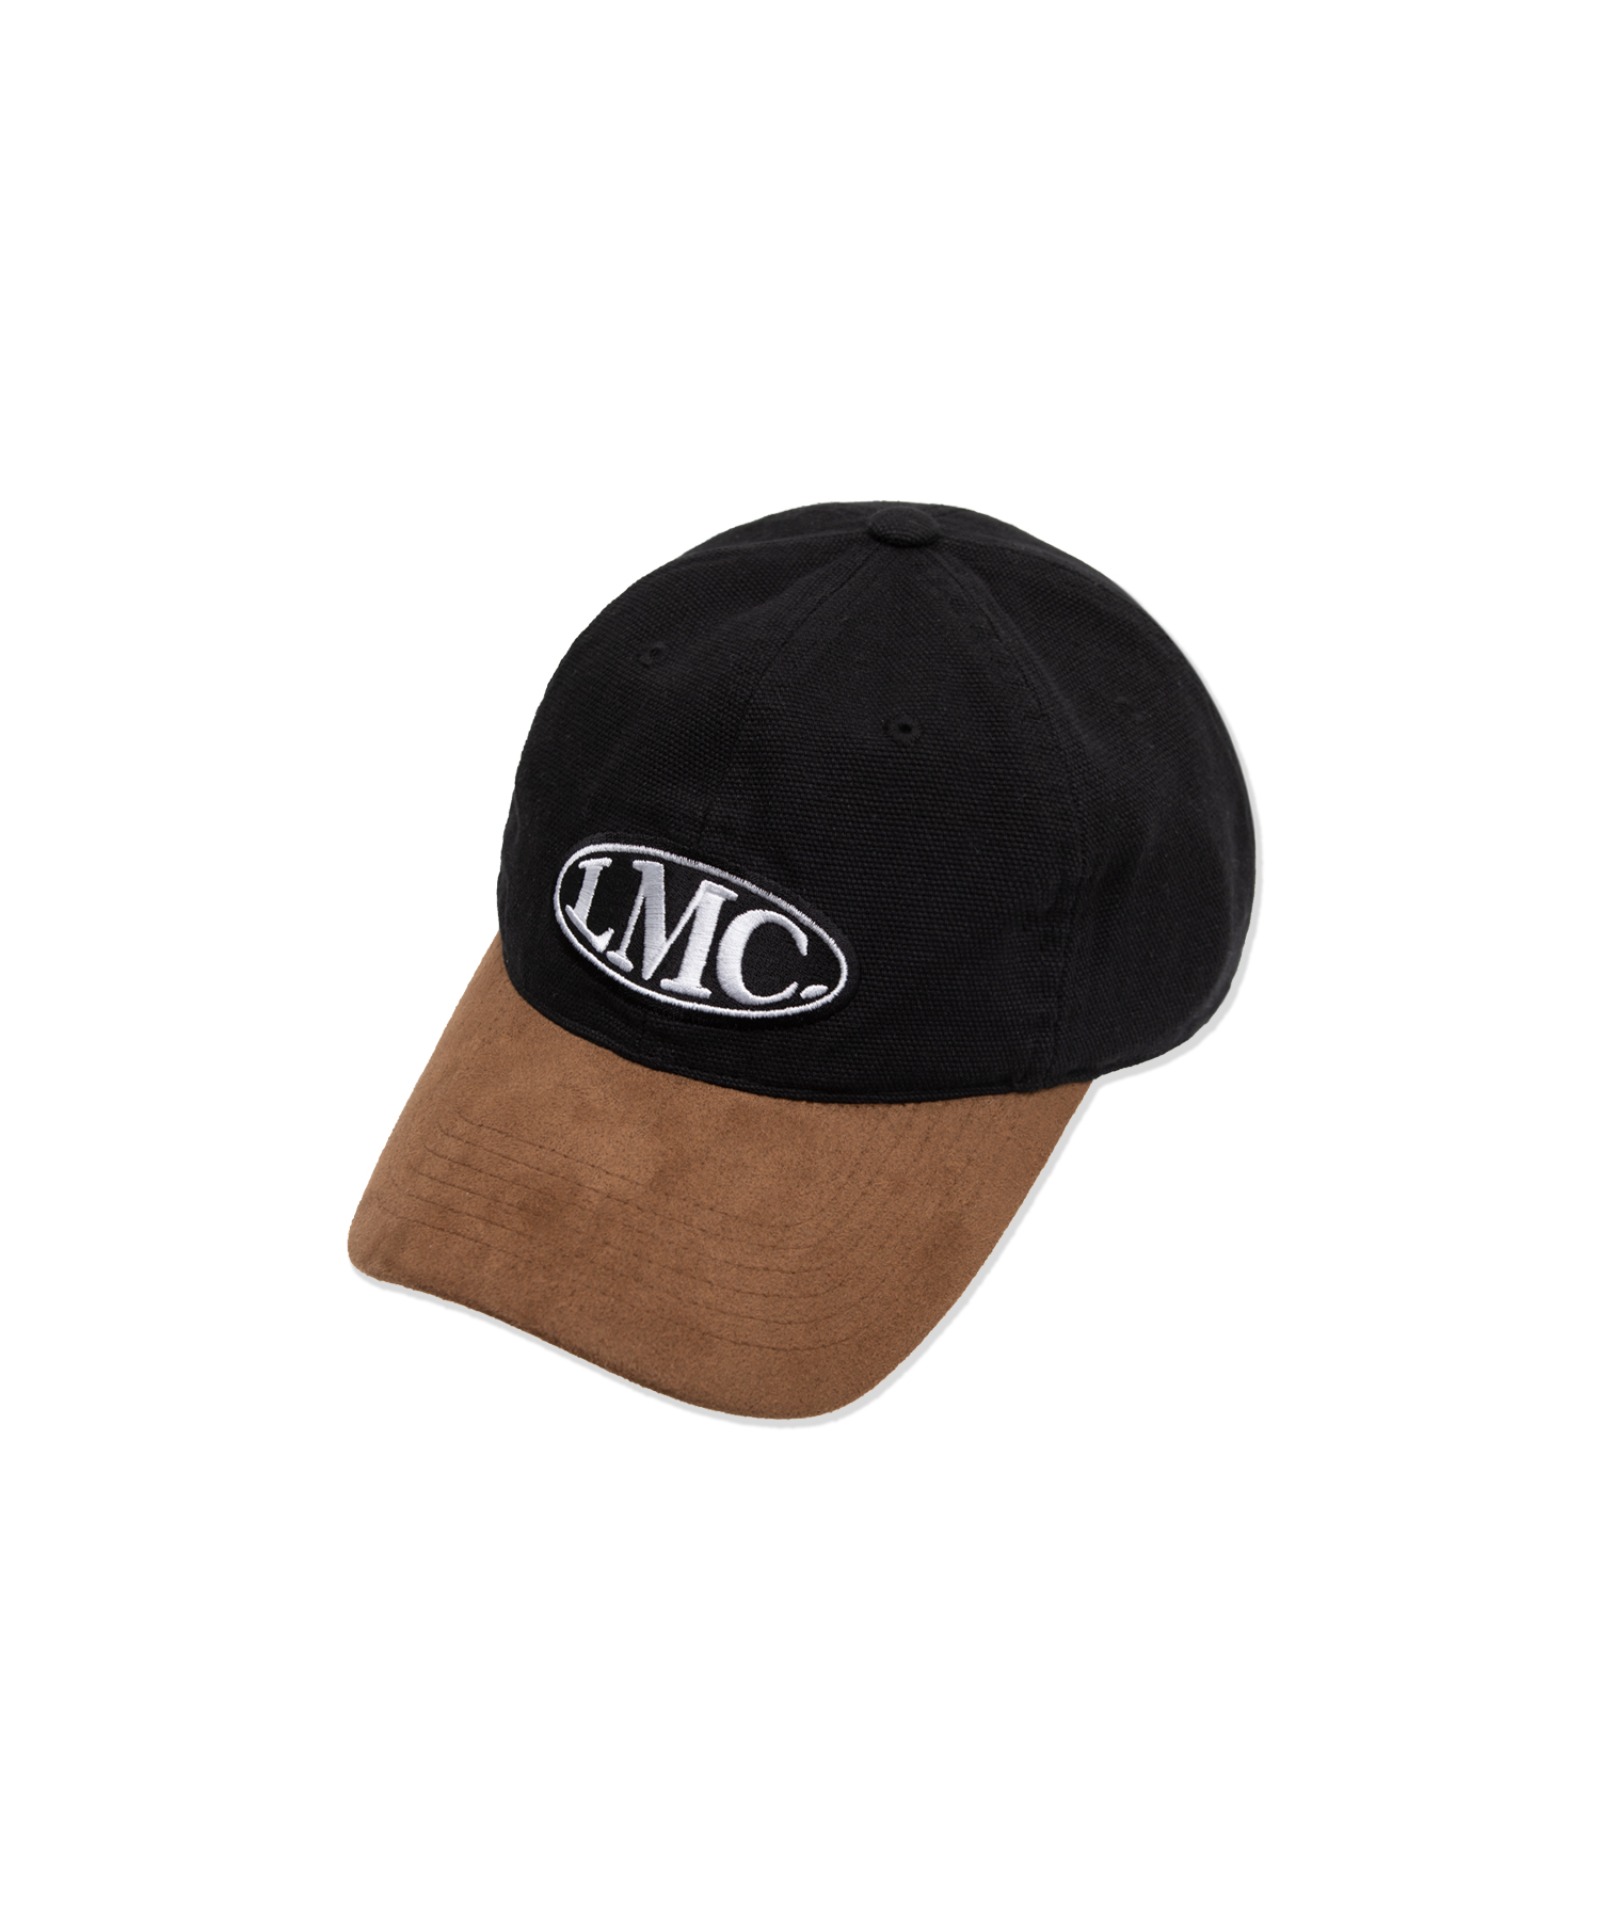 LMC OVAL TWO TONE 6PANEL CAP black